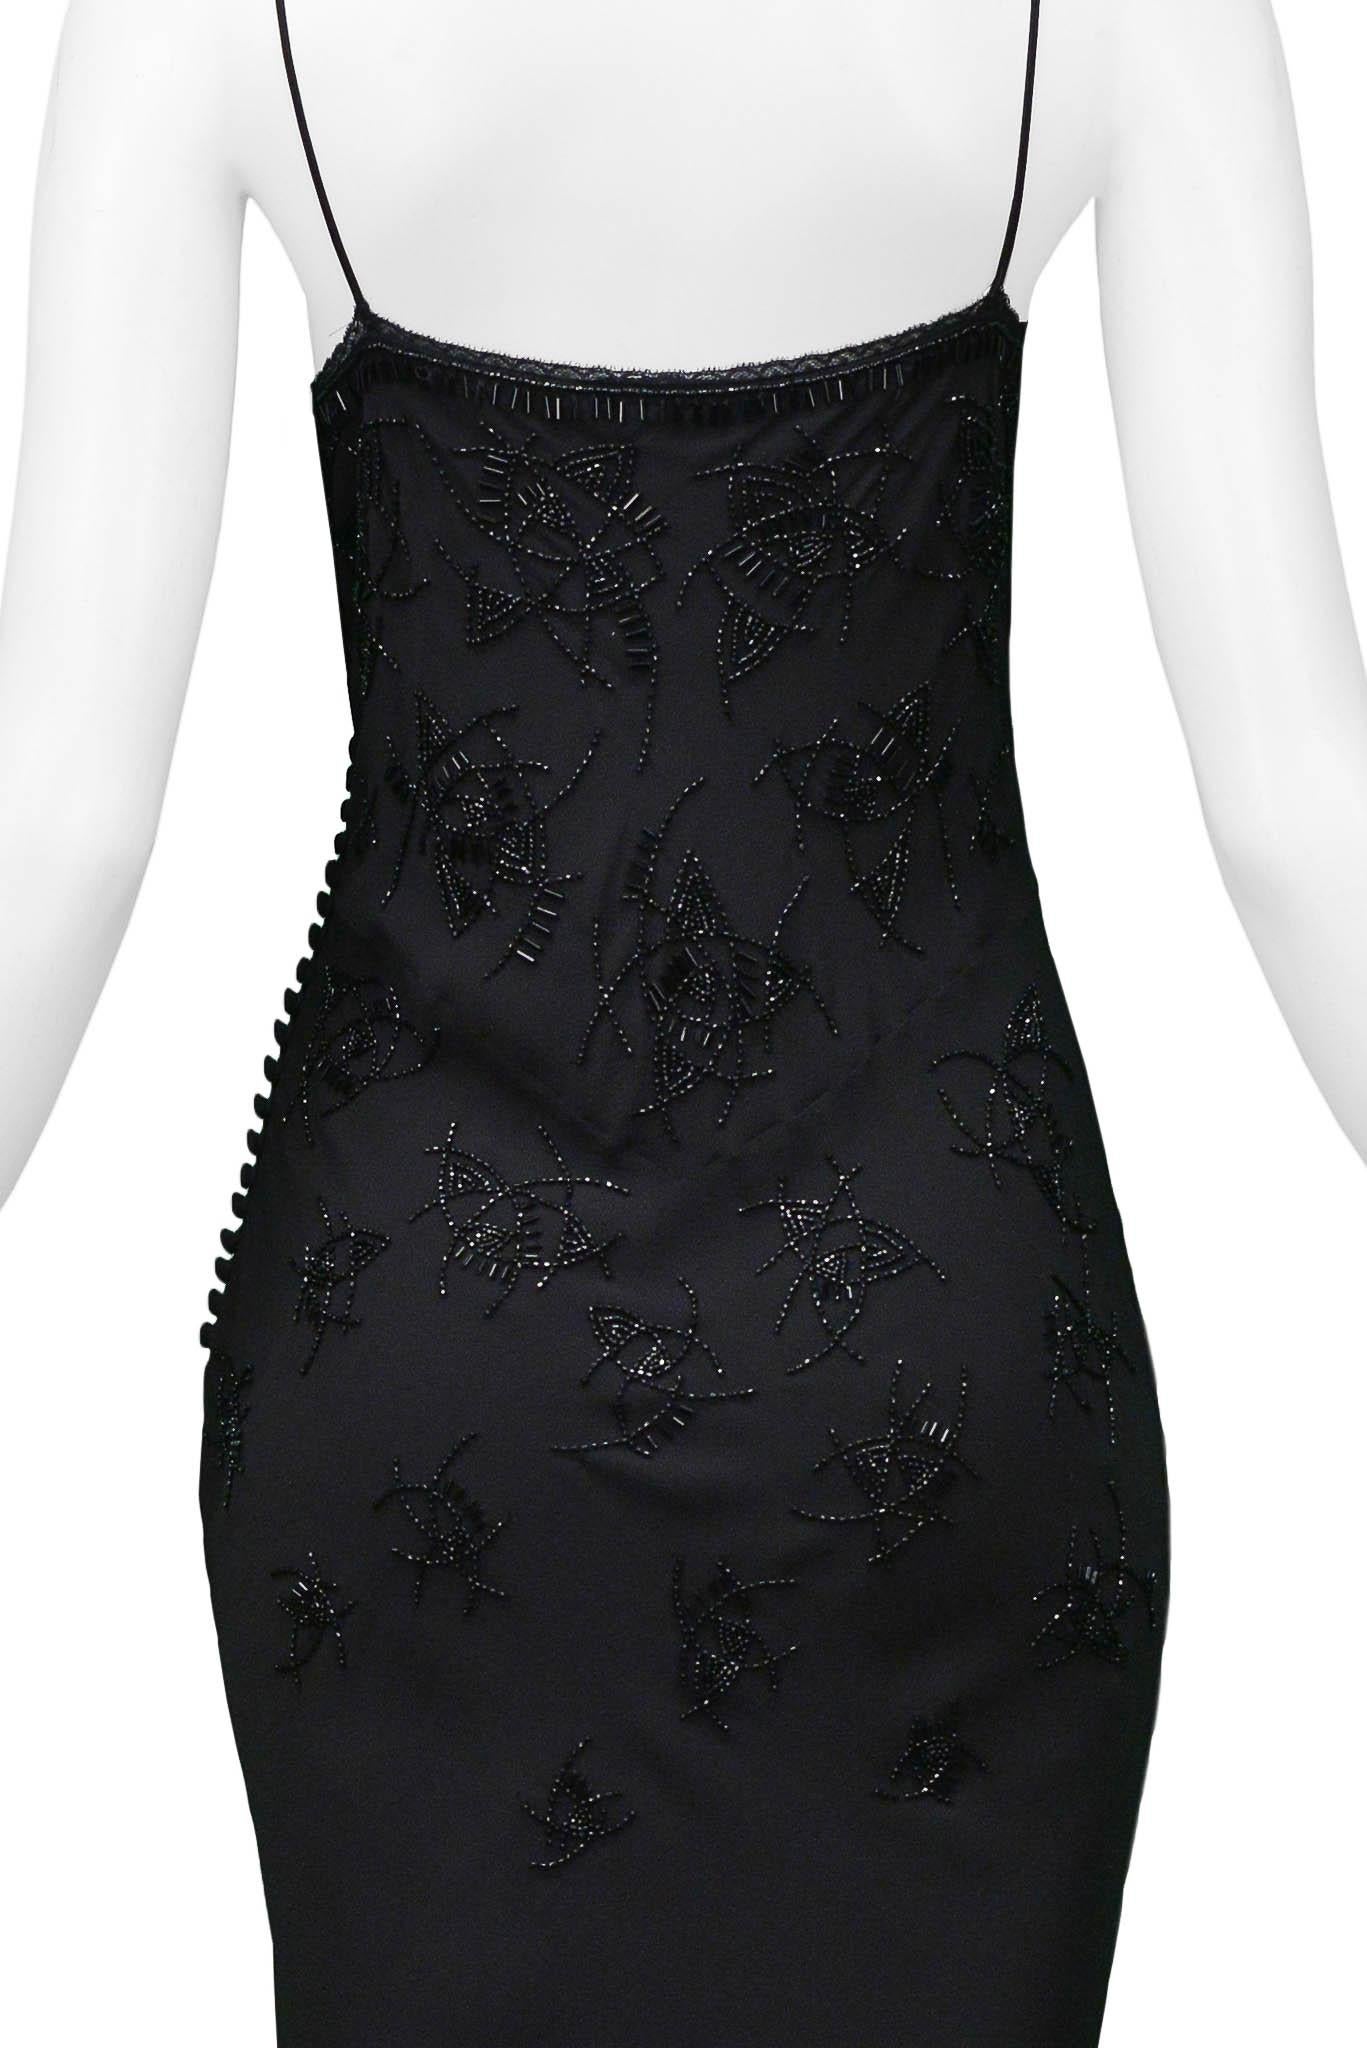 Christian Dior By John Galliano Black Beaded Silk Mid Length Dress 3